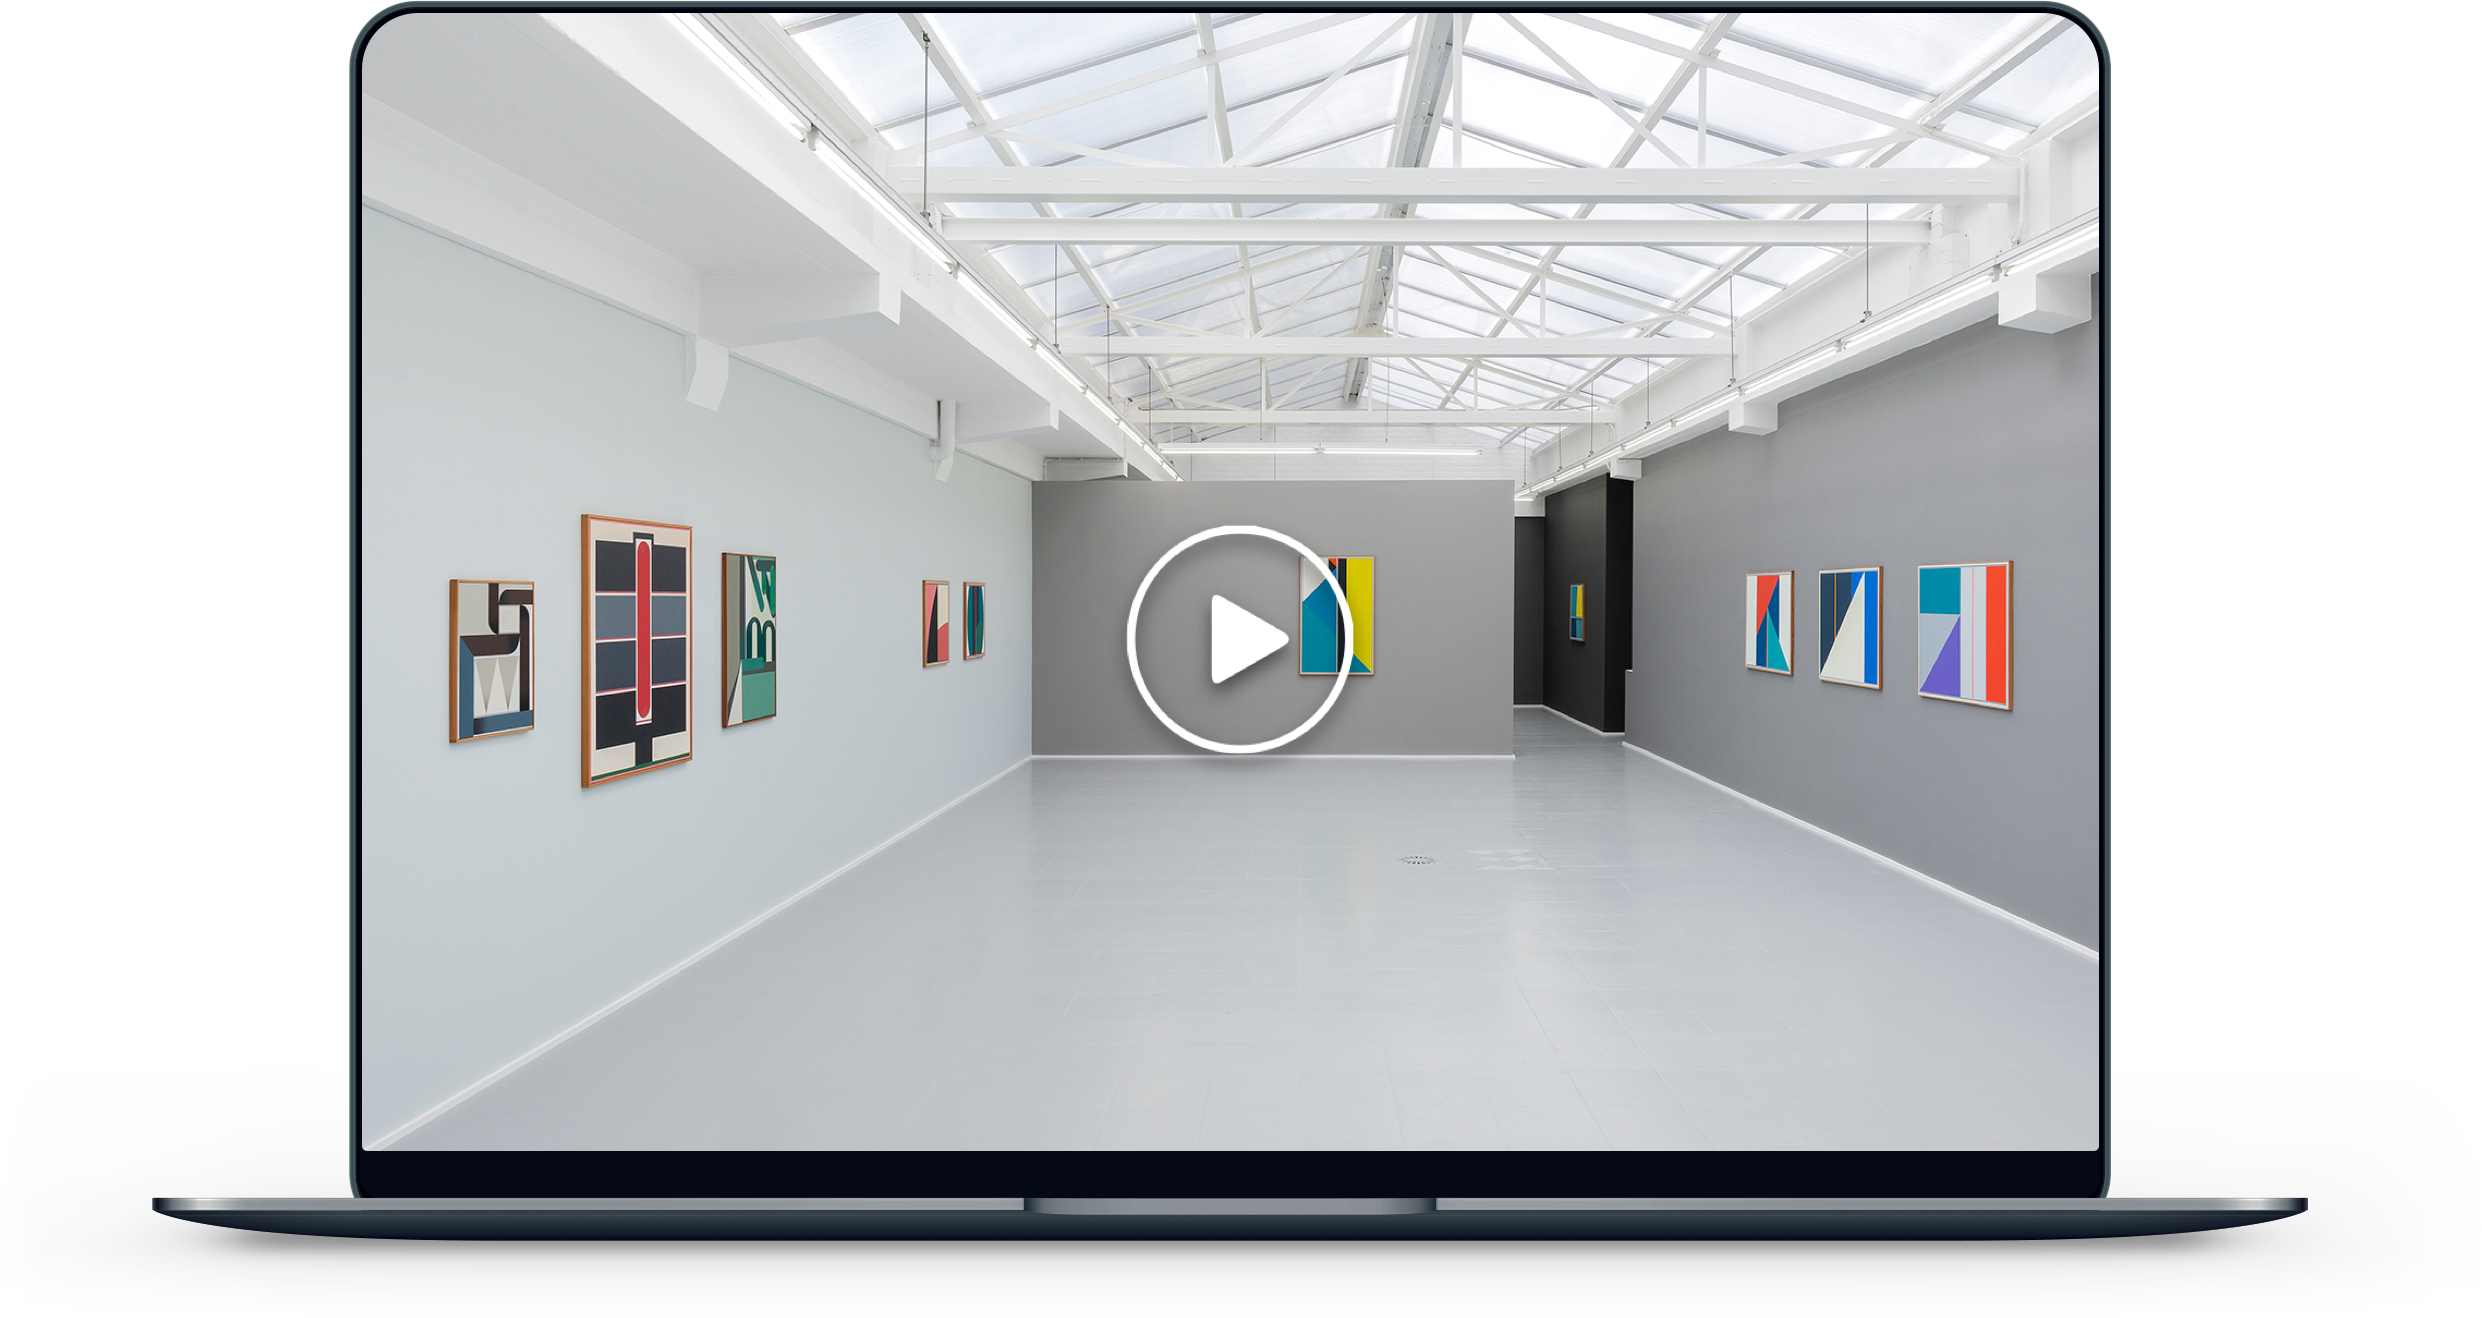 3d Virtual Art Gallery Template Free